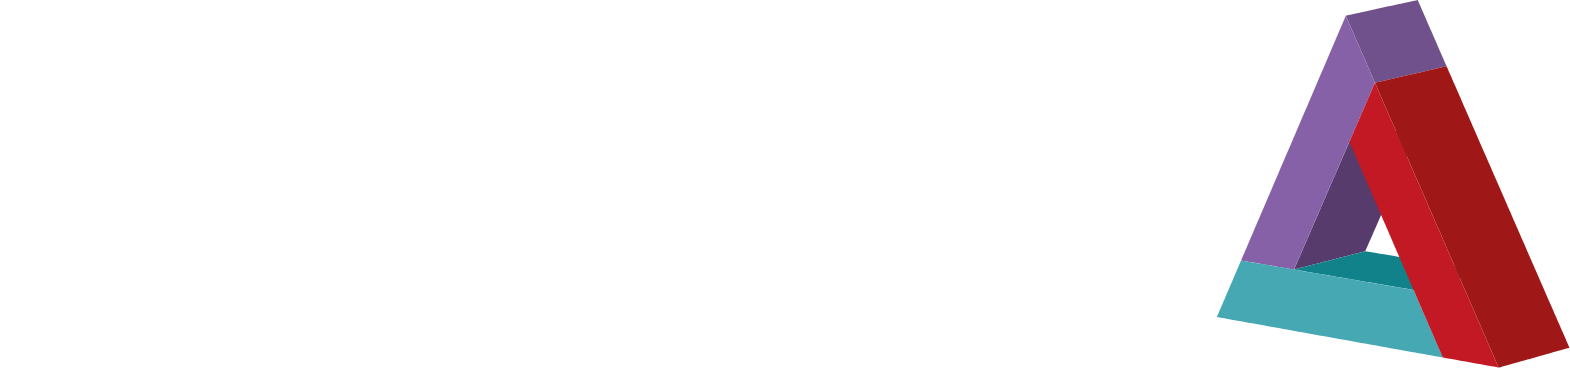 Helvetia Holding logo grand pour les fonds sombres (PNG transparent)